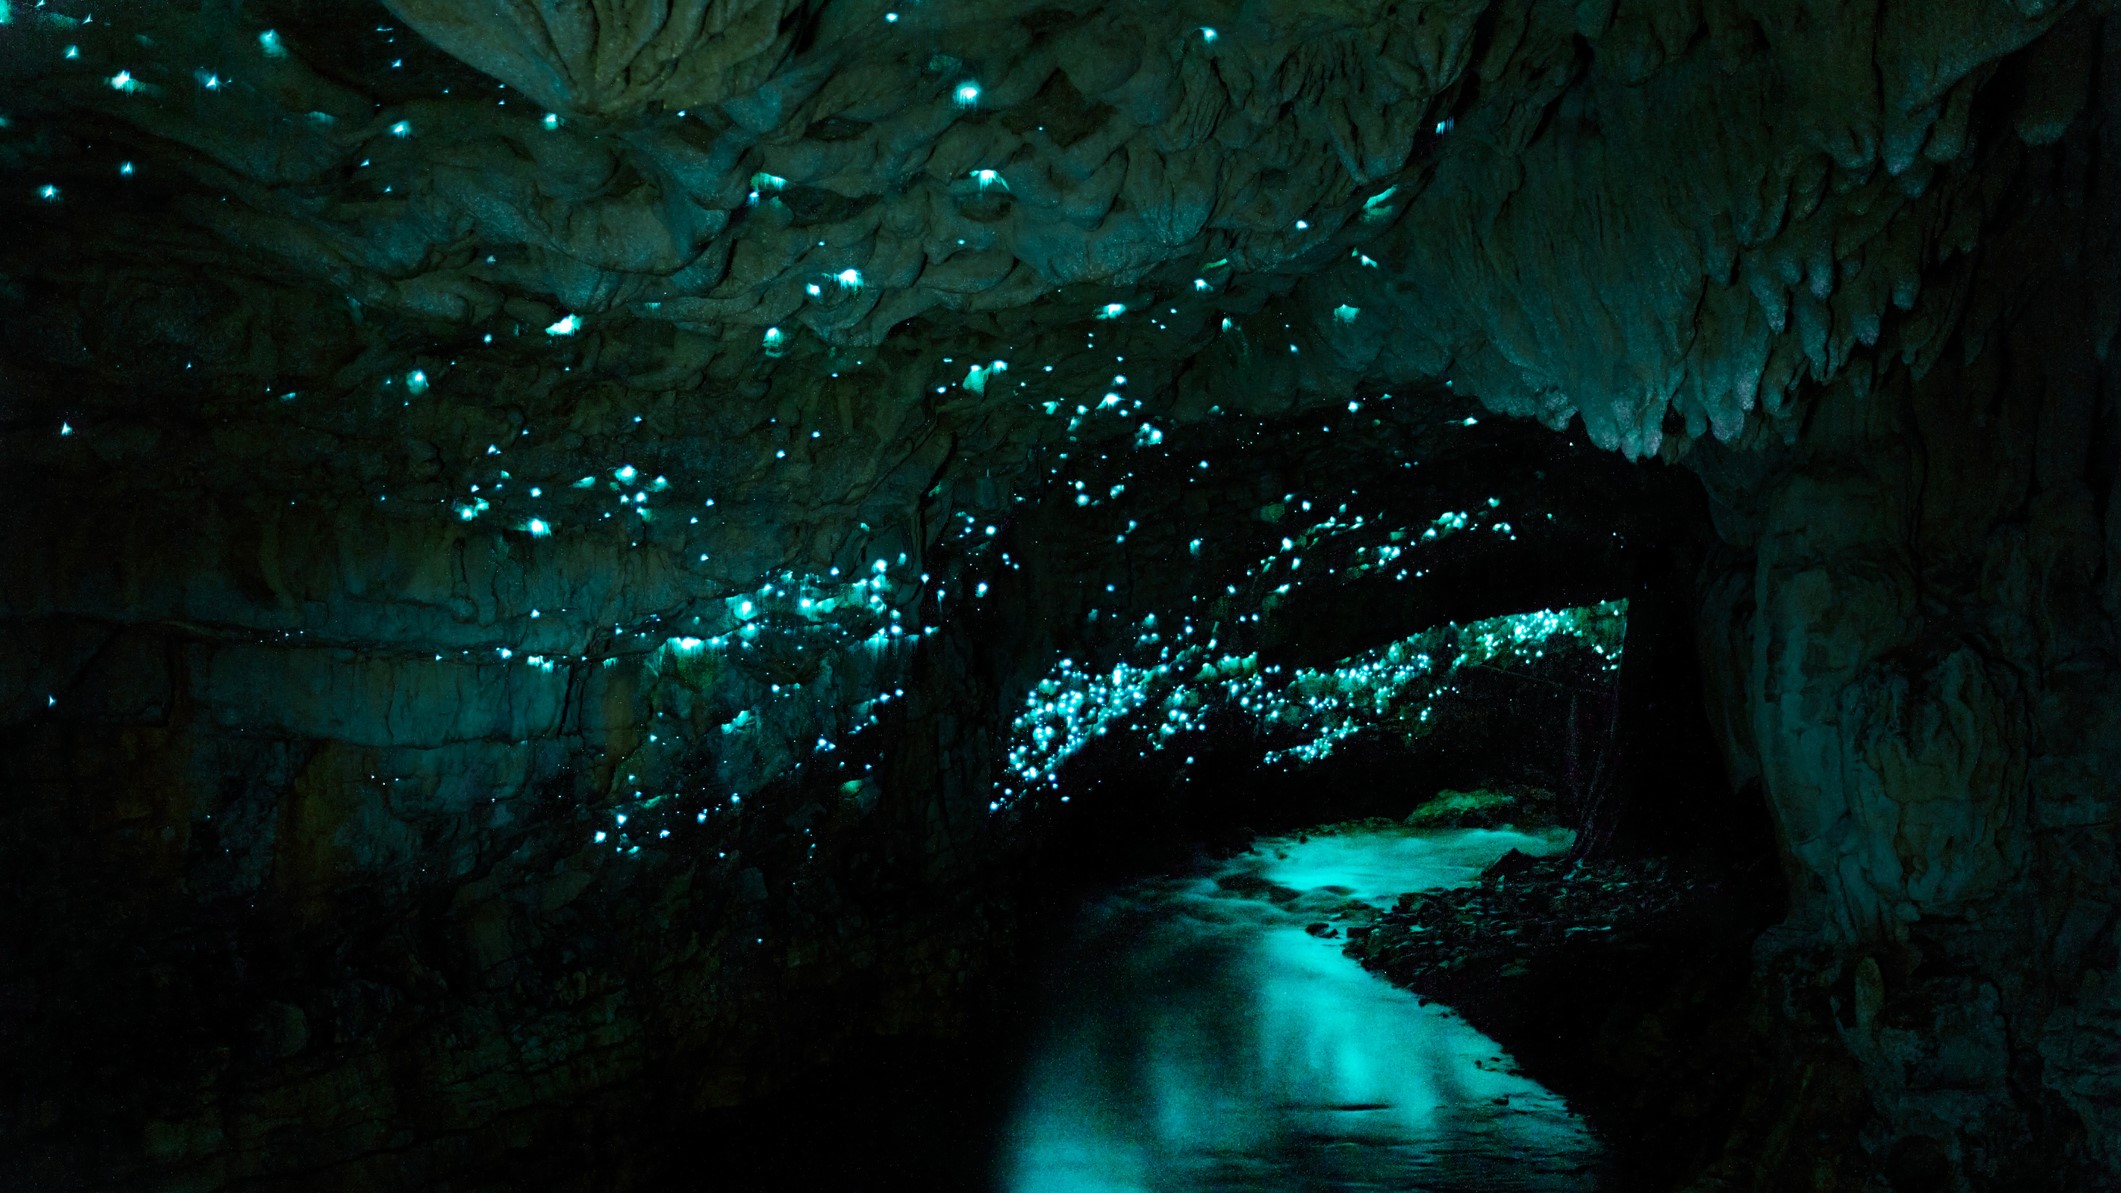 Cave illuminated with glowworms emitting a blue light.